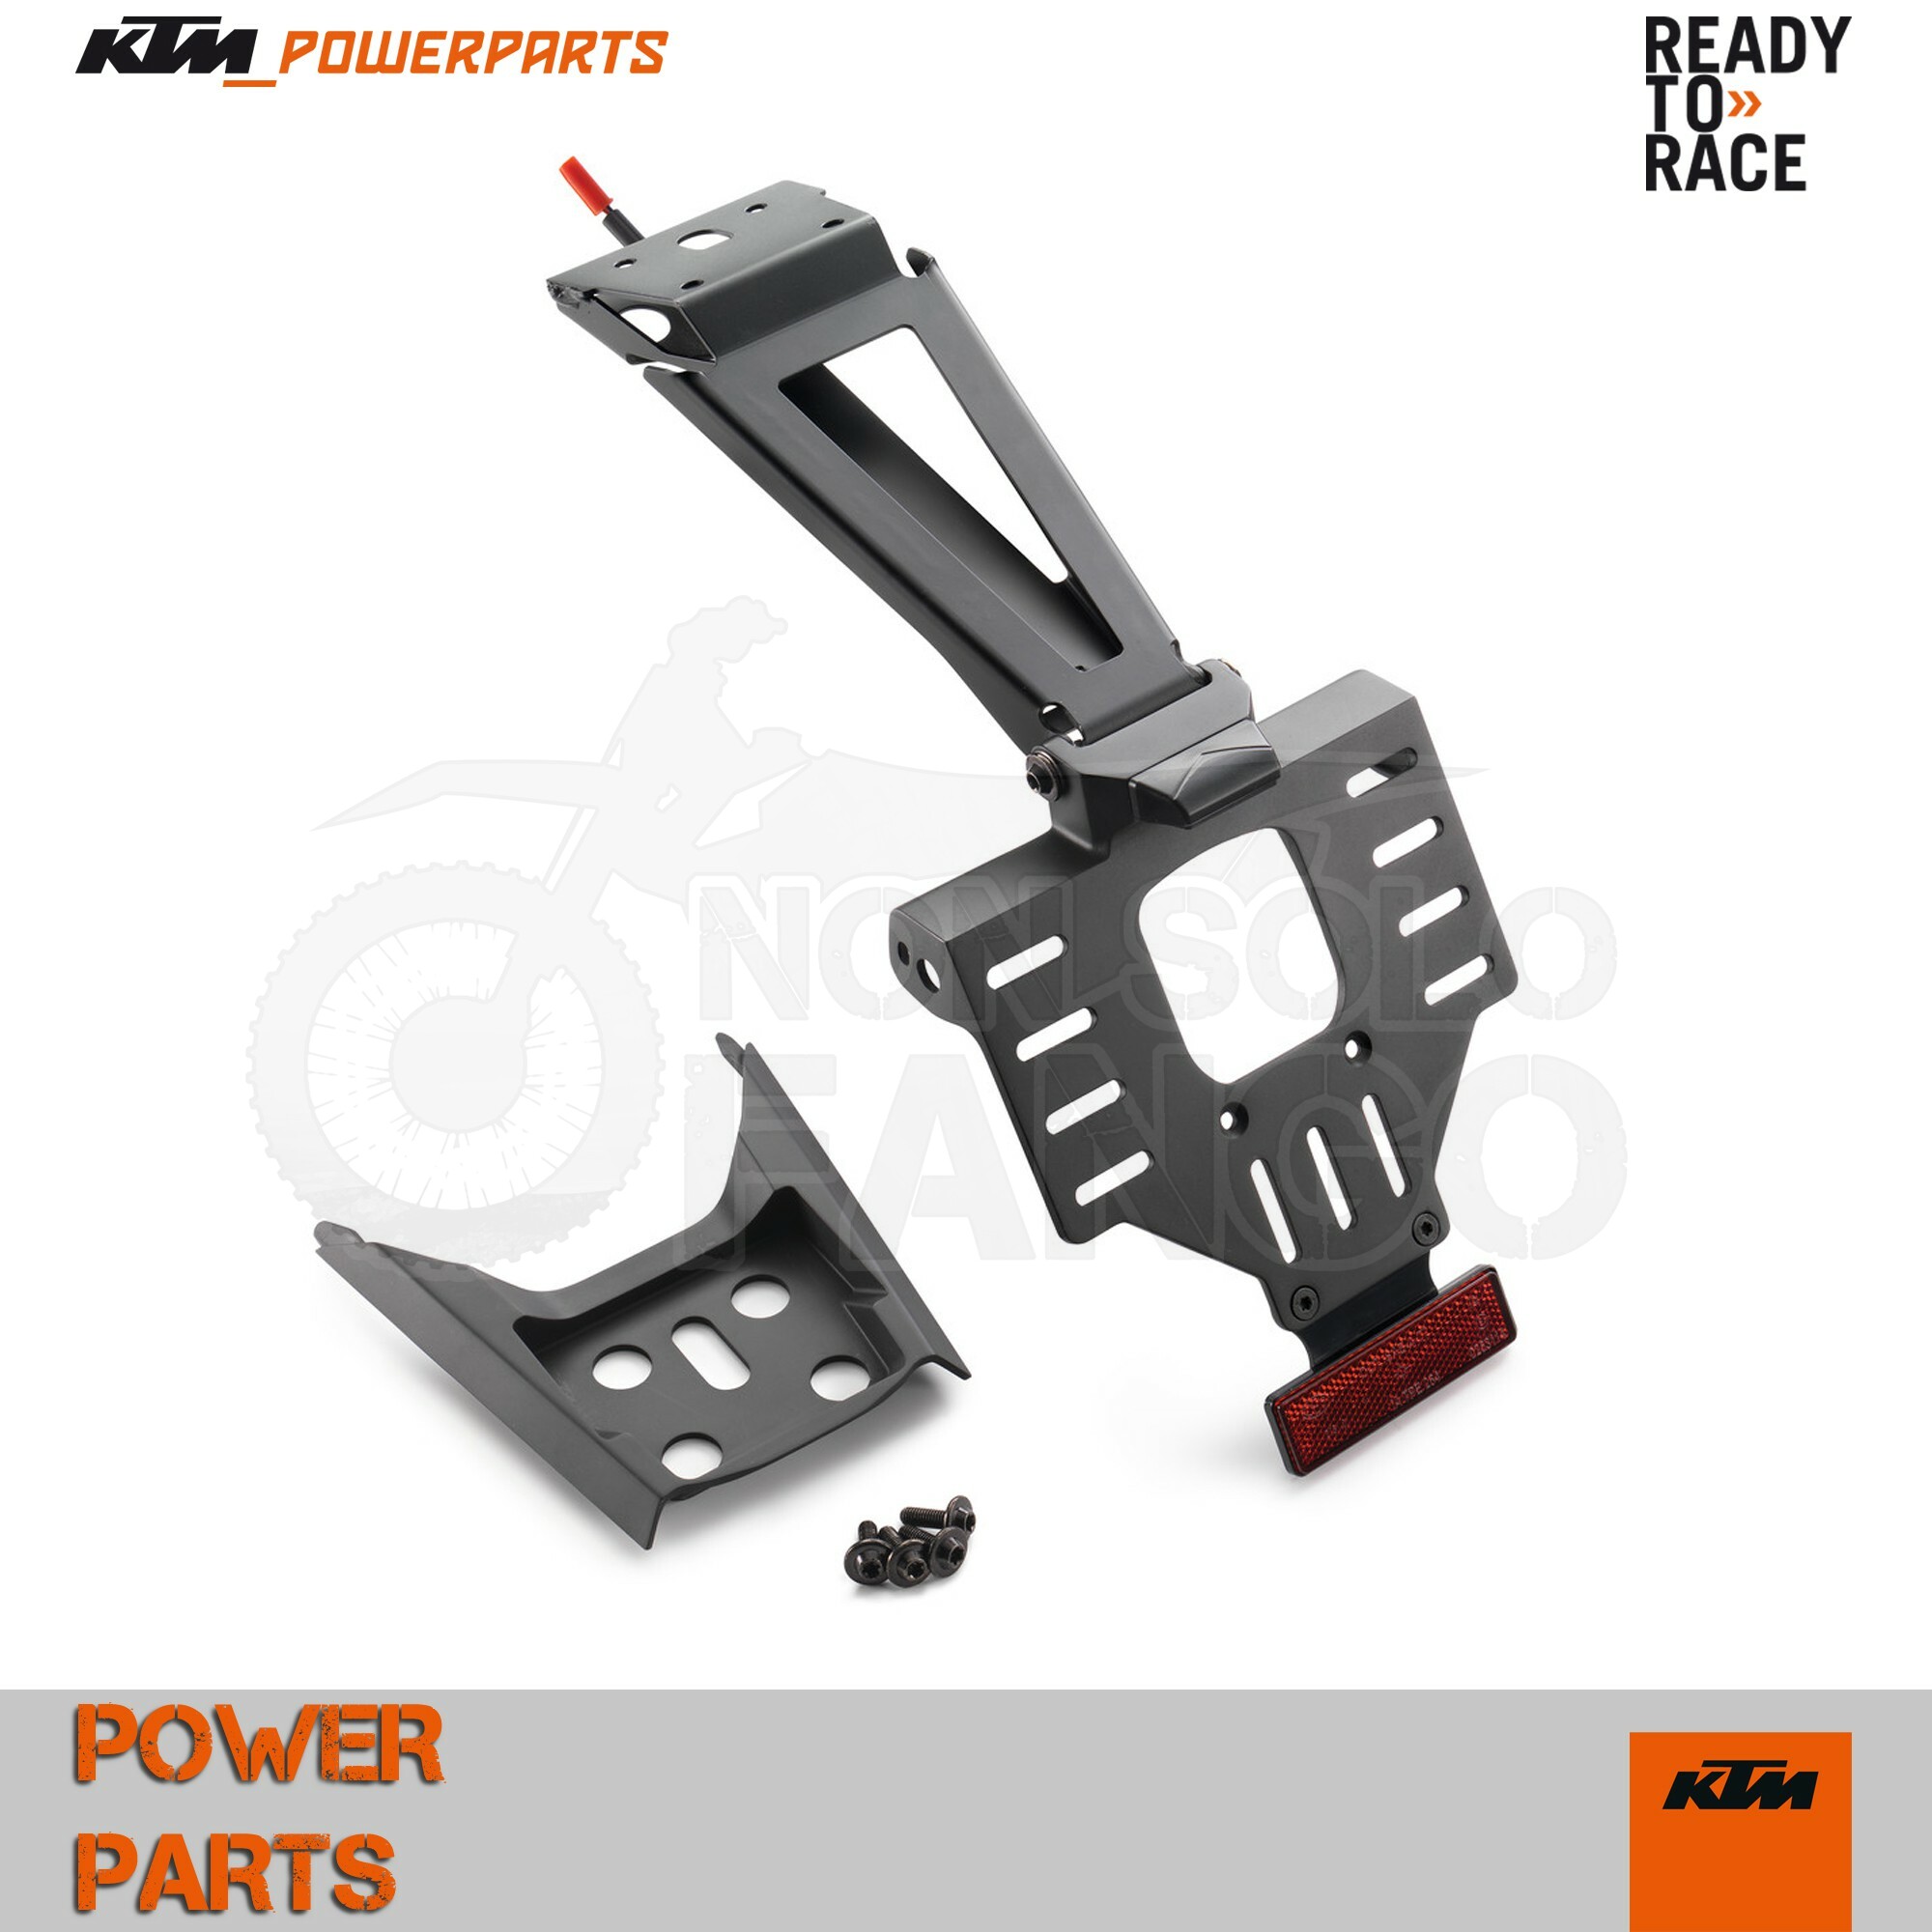 Portatarga ridotto KTM Power Parts Duke 125 390 dal 2017